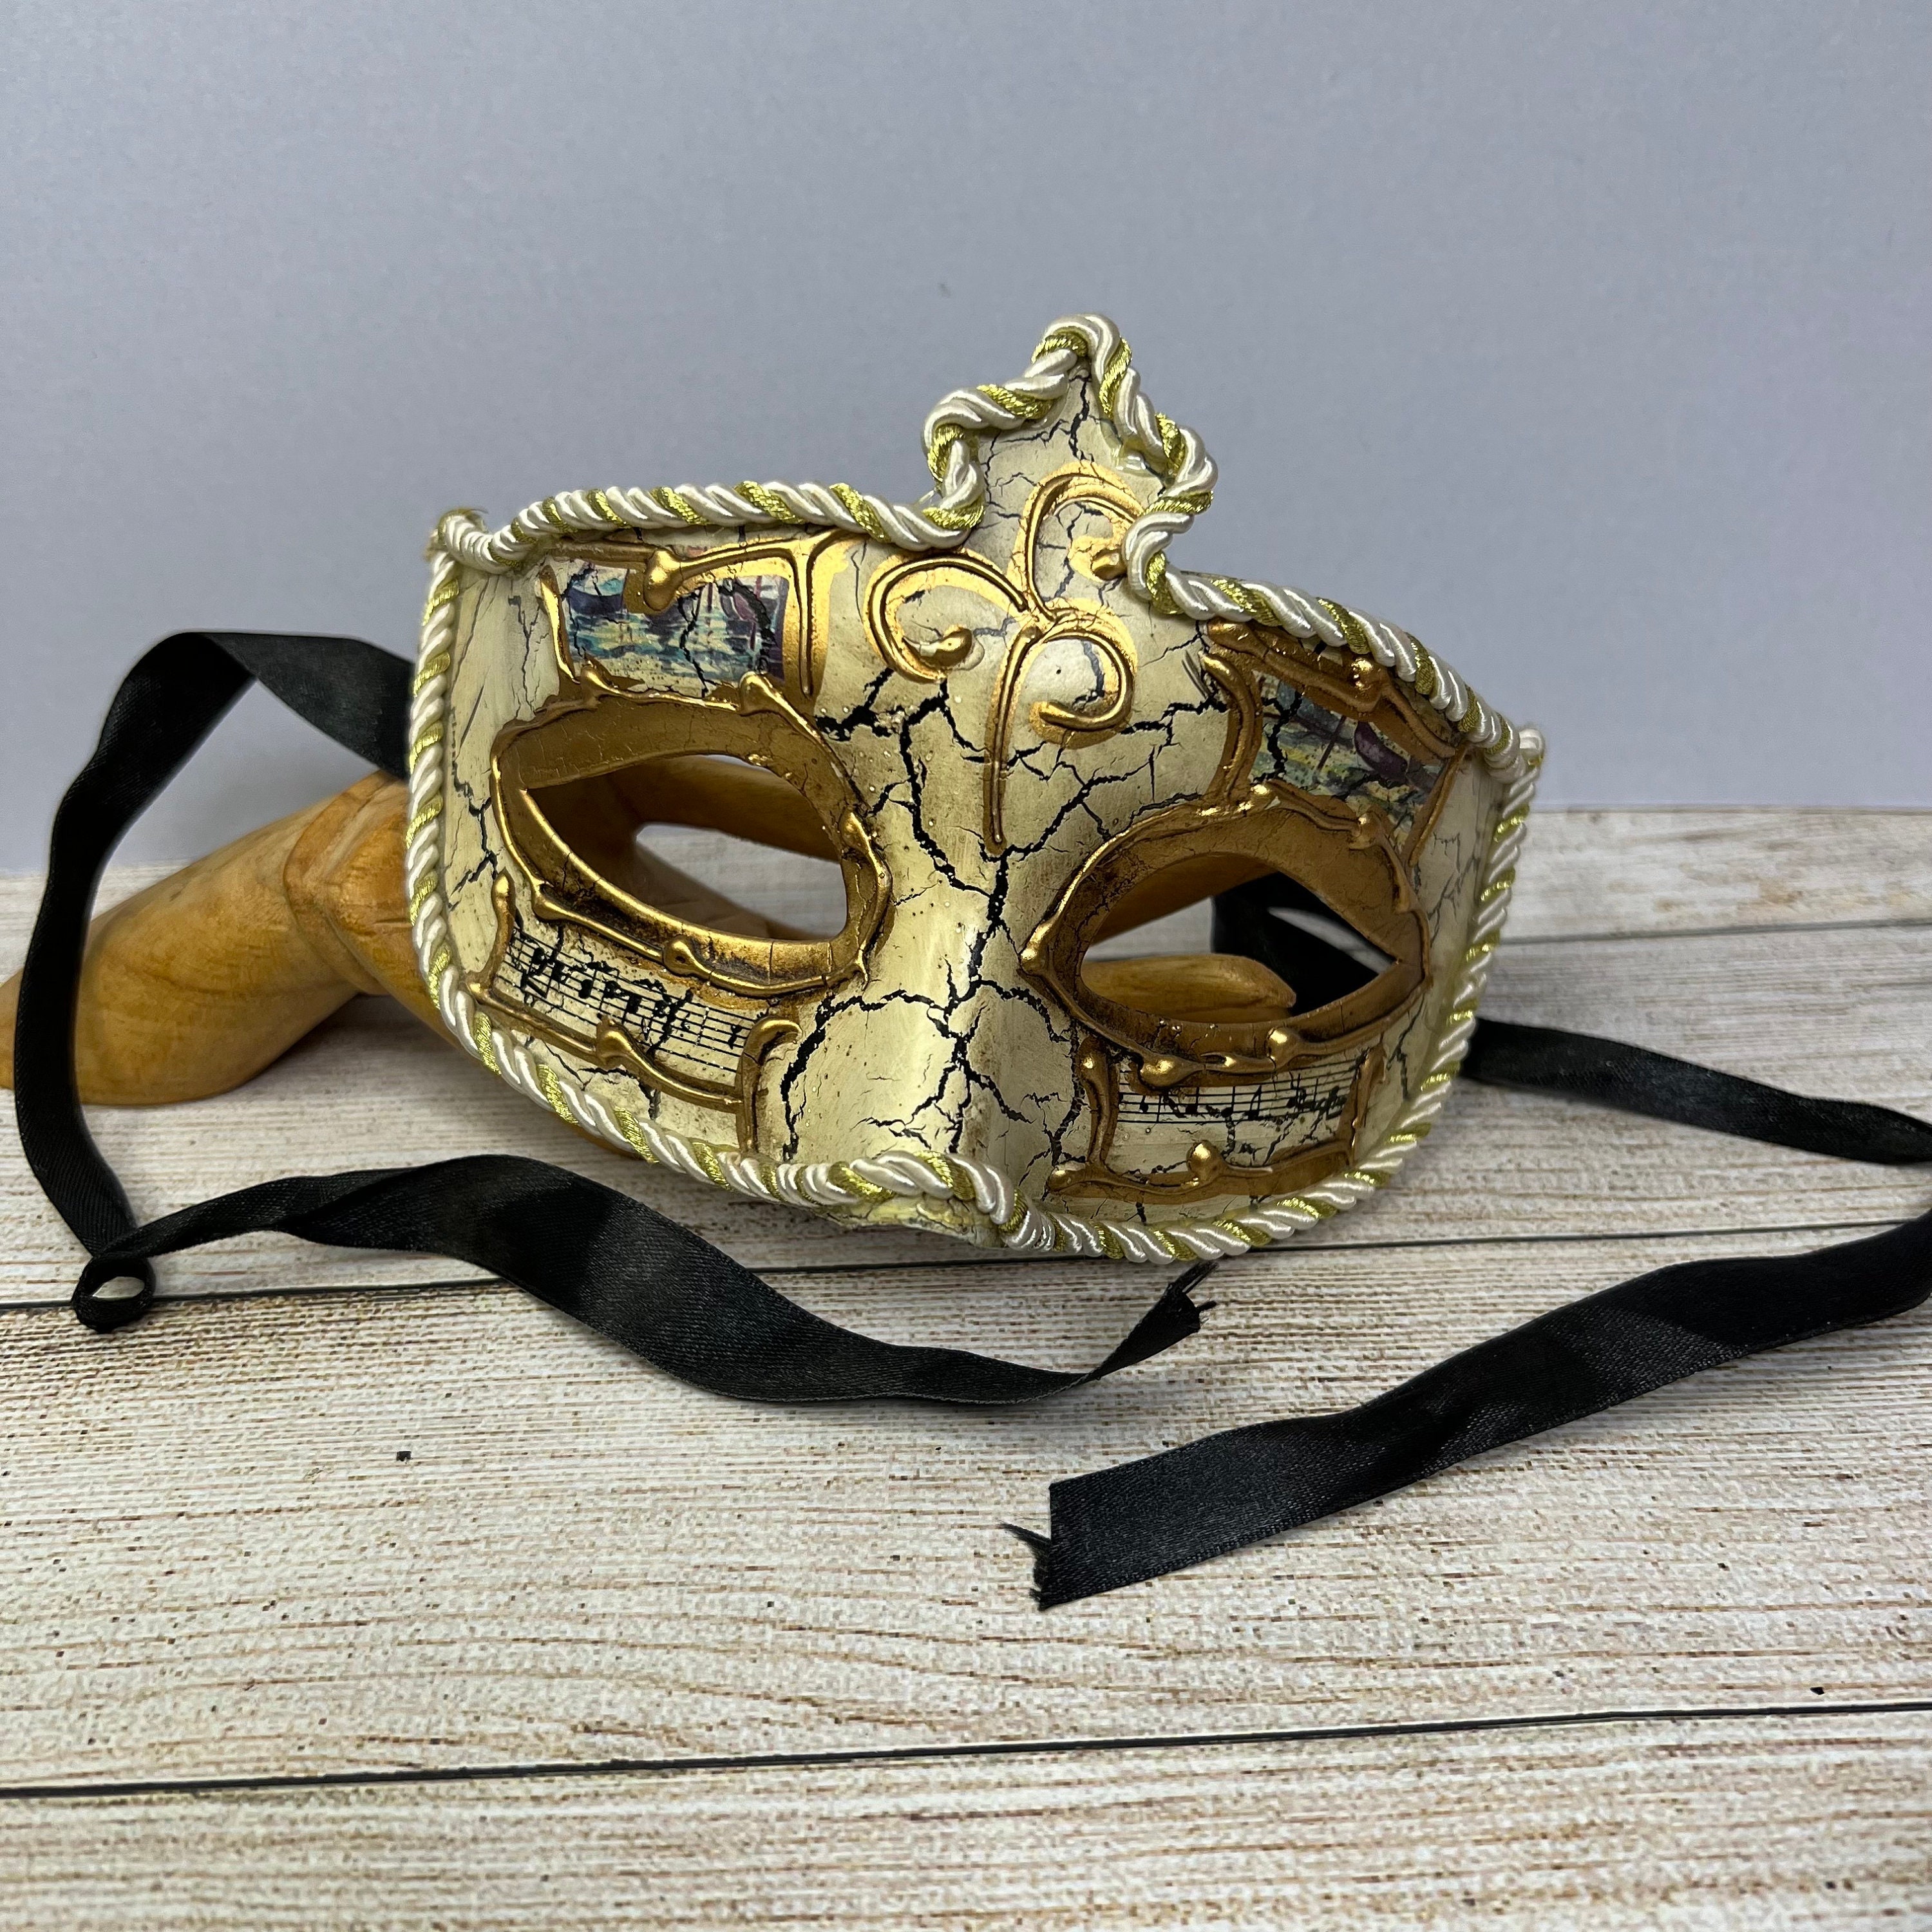 Rayna Alencon Lace Blindfold Venetian Eye Mask in Ivory or Black